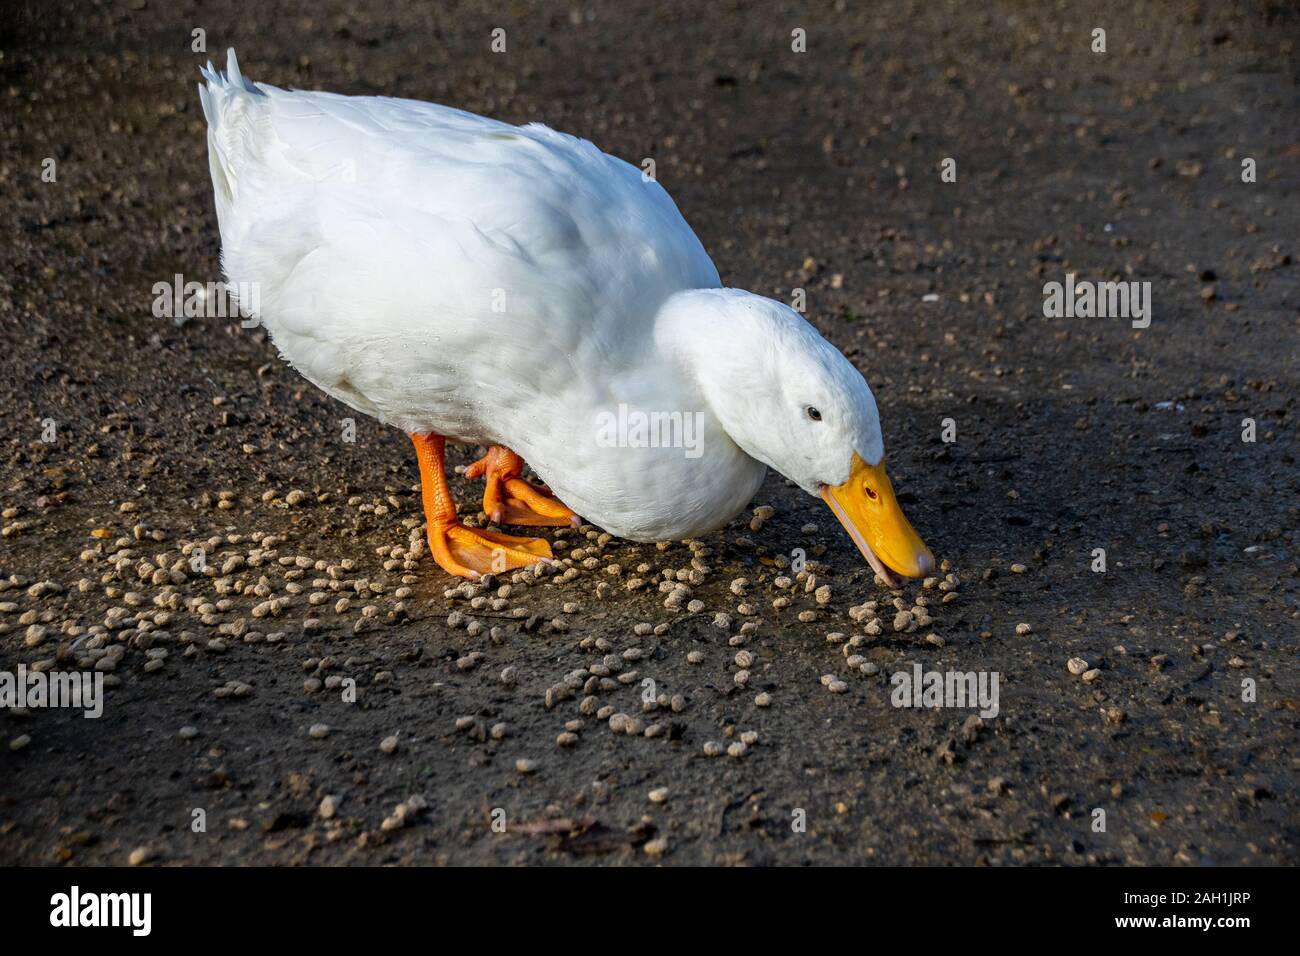 White american pekin ducks (also known as long island or aylesbury ducks) eating bird food pellets Stock Photo